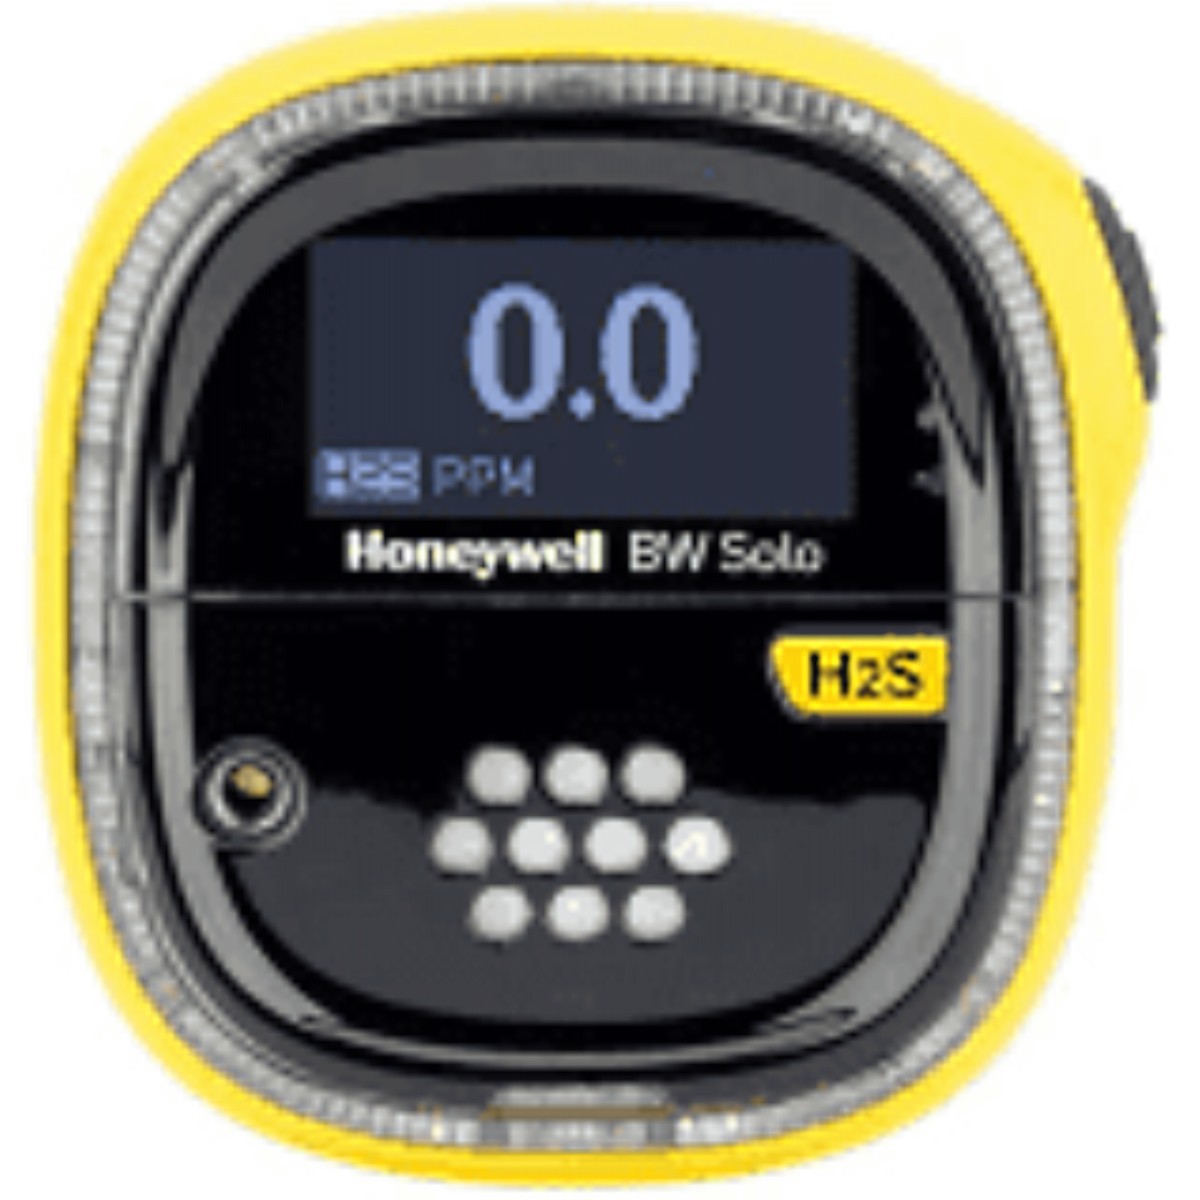 Honeywell BW™ Solo Portable Carbon Monoxide Monitor